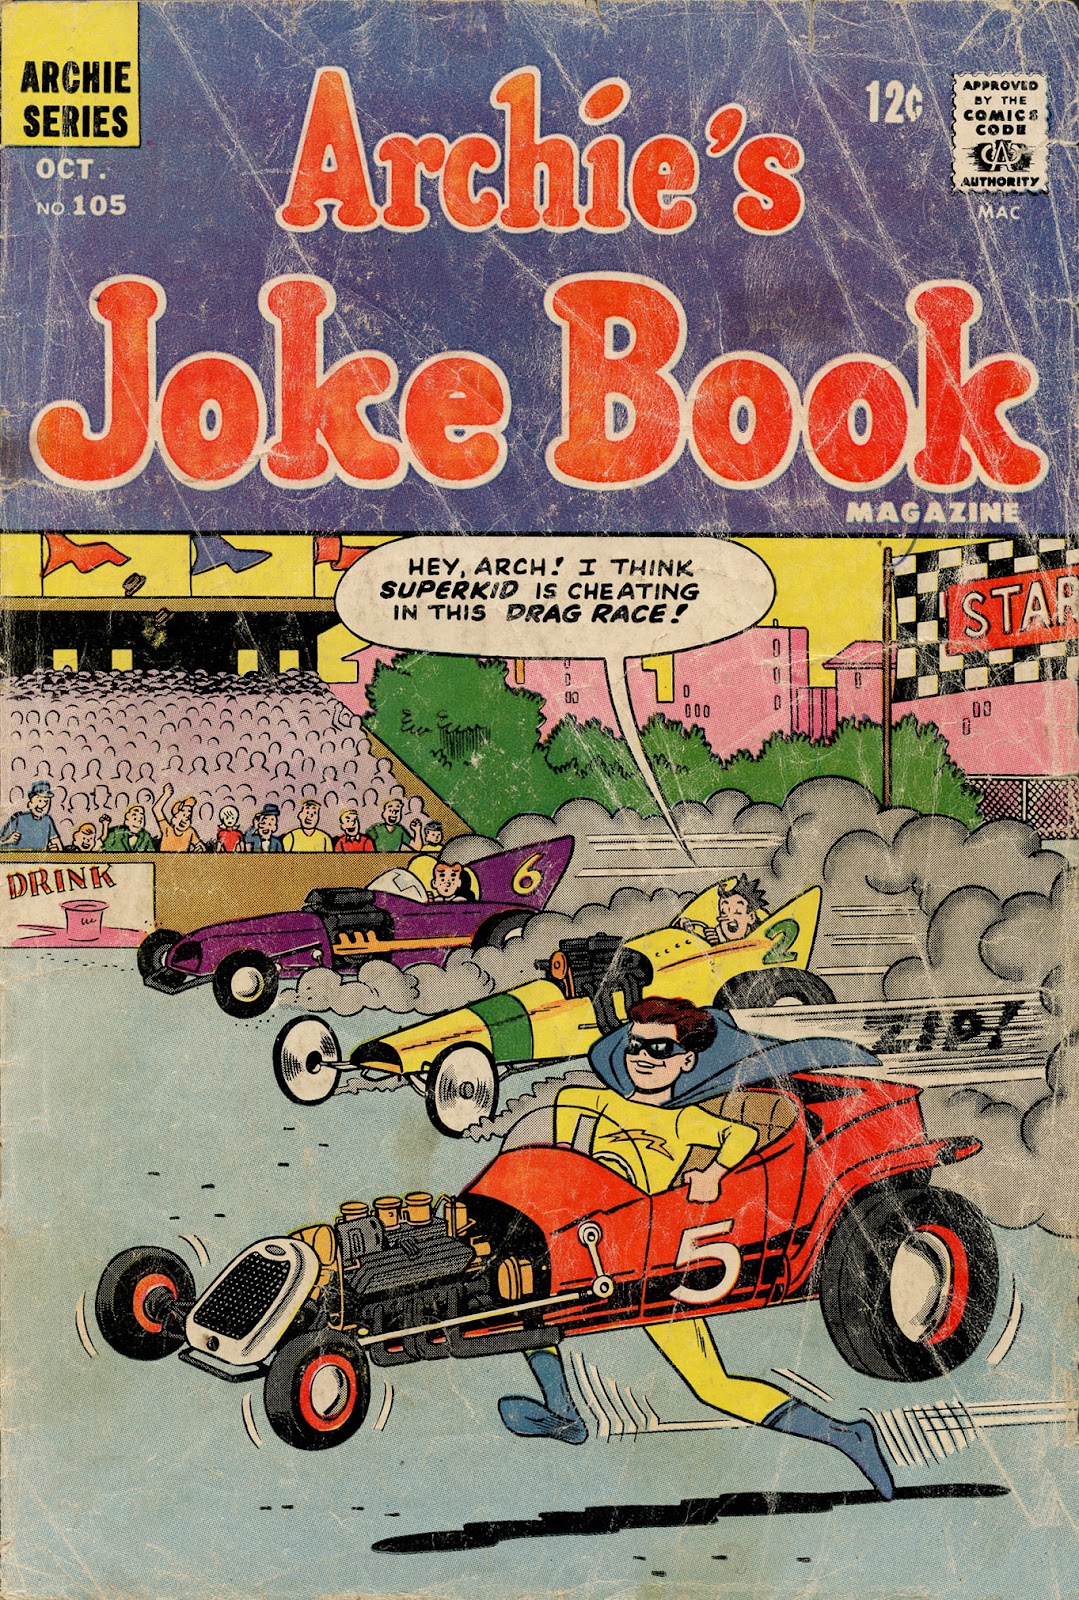 Archie's Joke Book Magazine issue 105 - Page 1